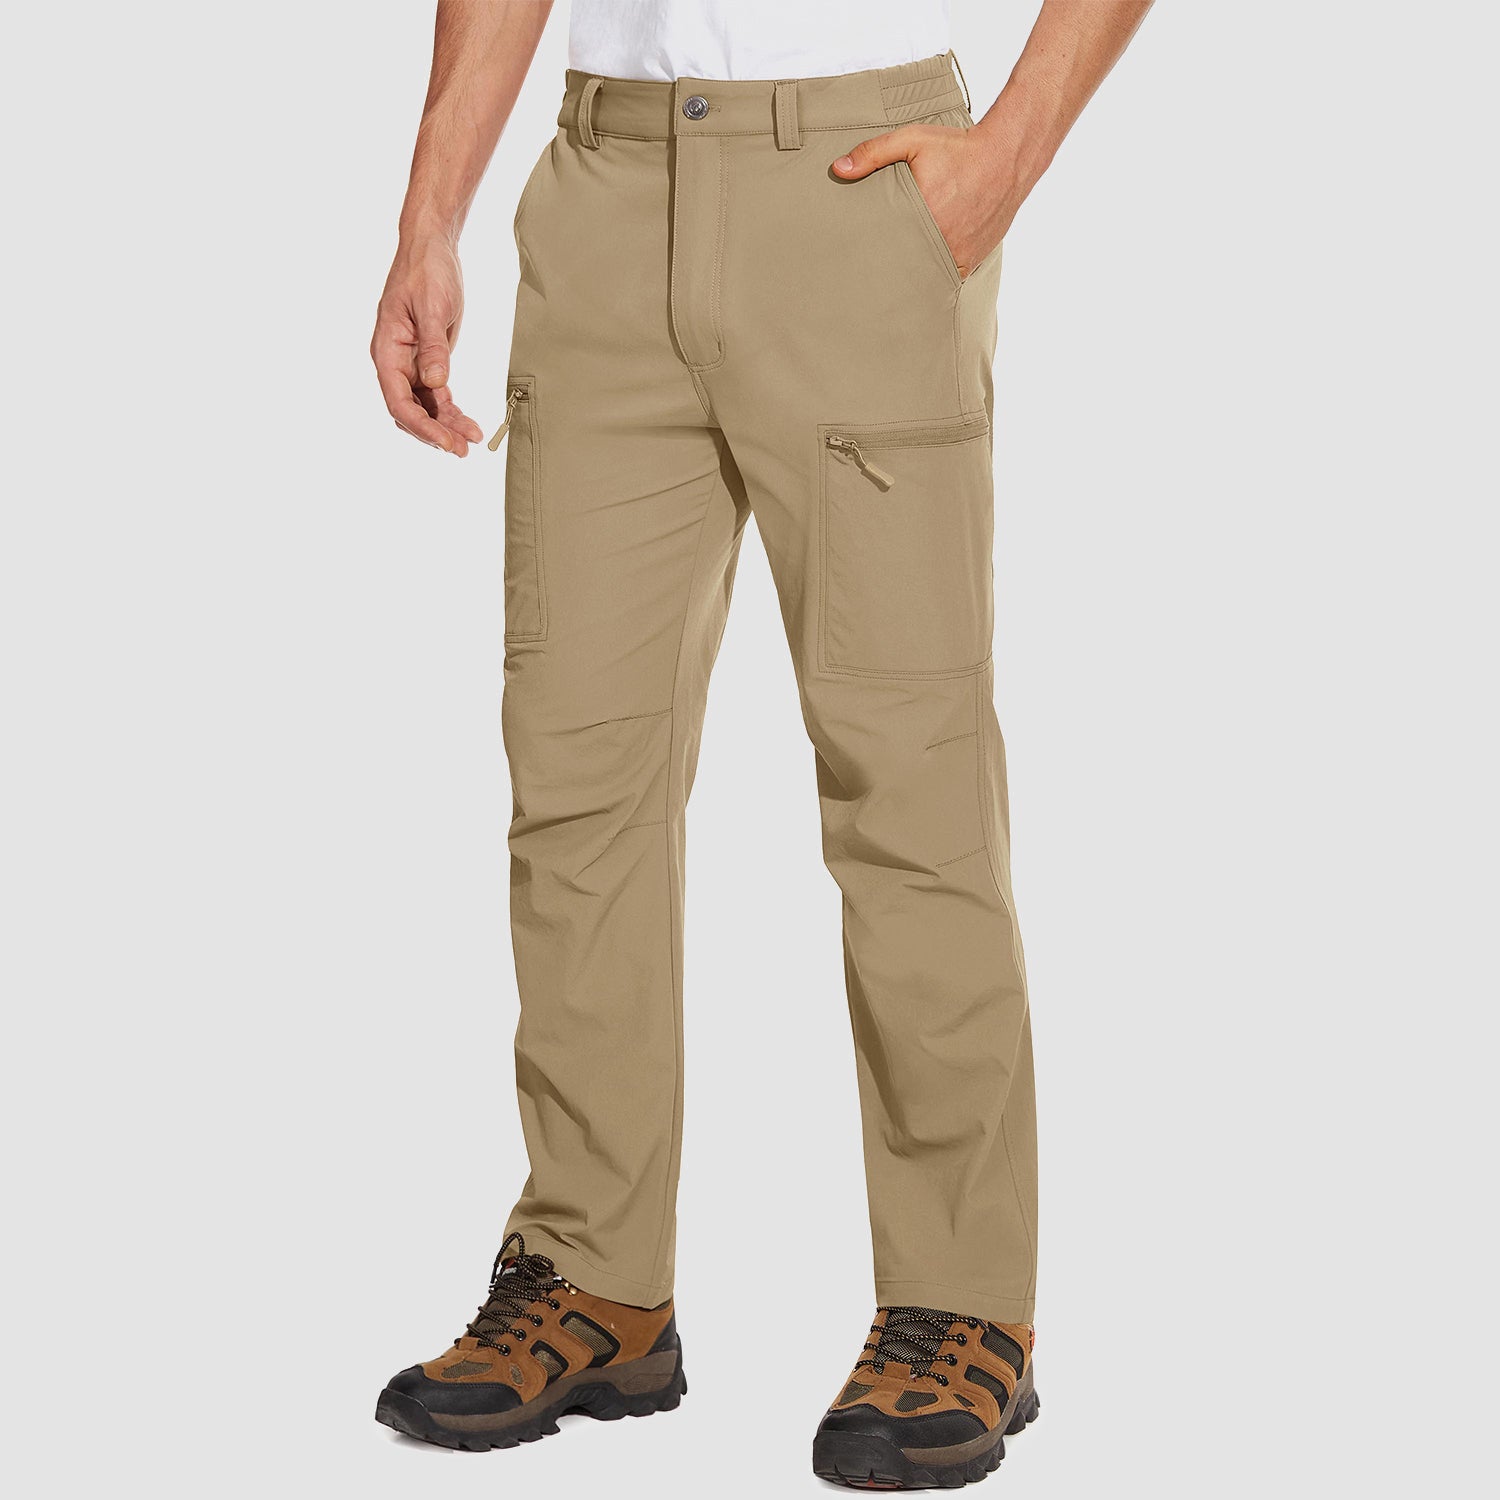 MAGCOMSEN Women's Quick Dry Hiking Pants Multi-zipper Pockets